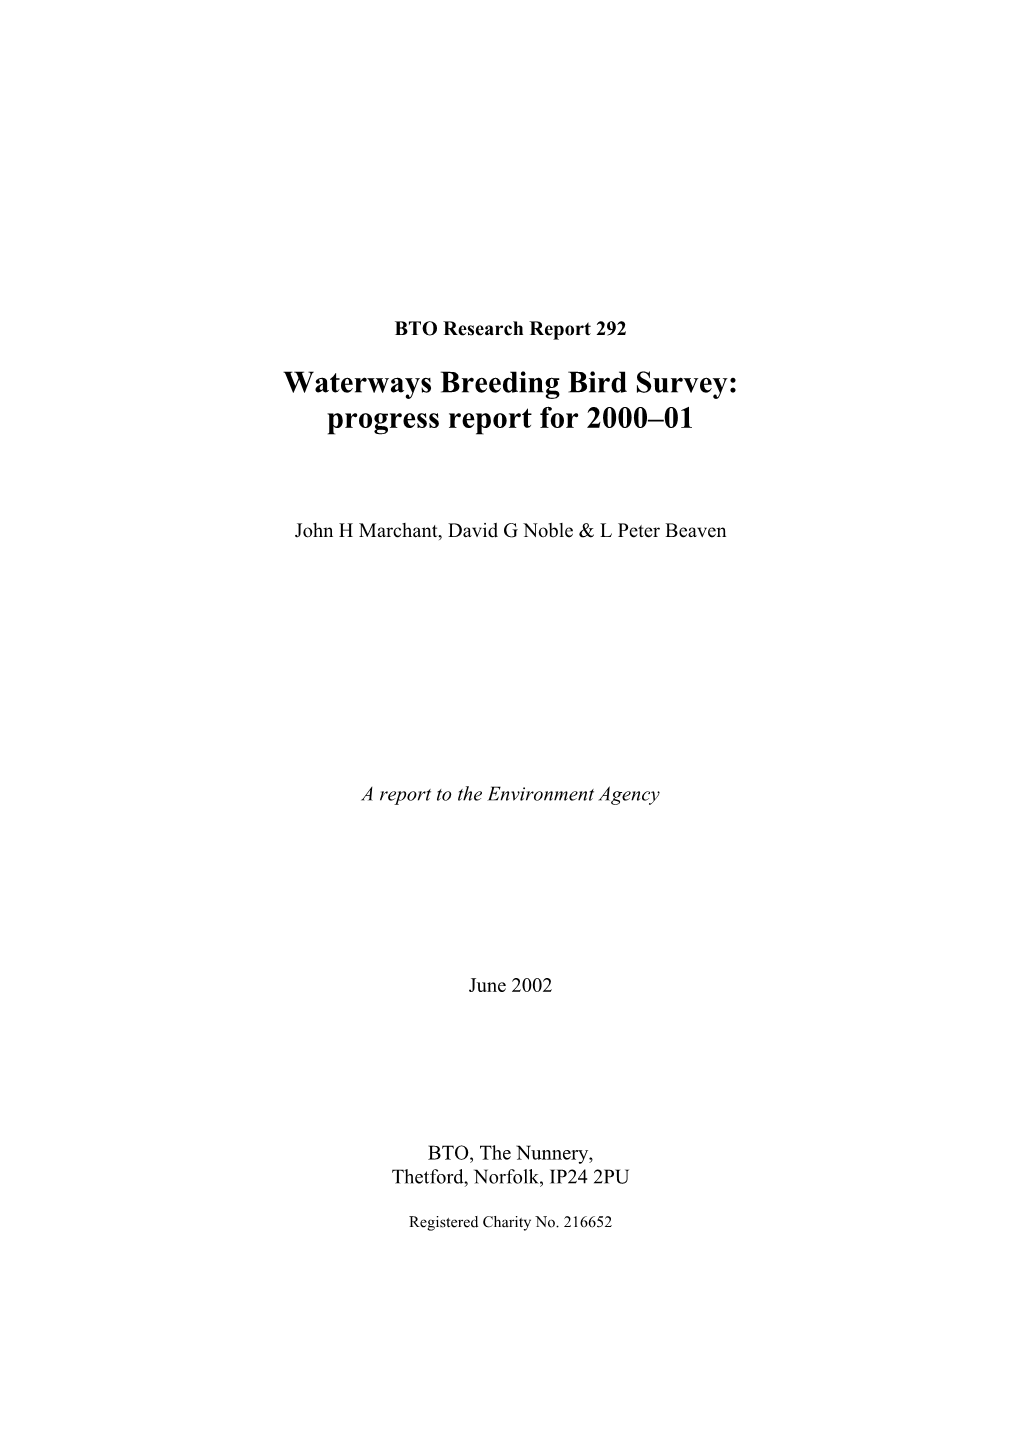 Waterways Breeding Bird Survey: Progress Report for 2000–01